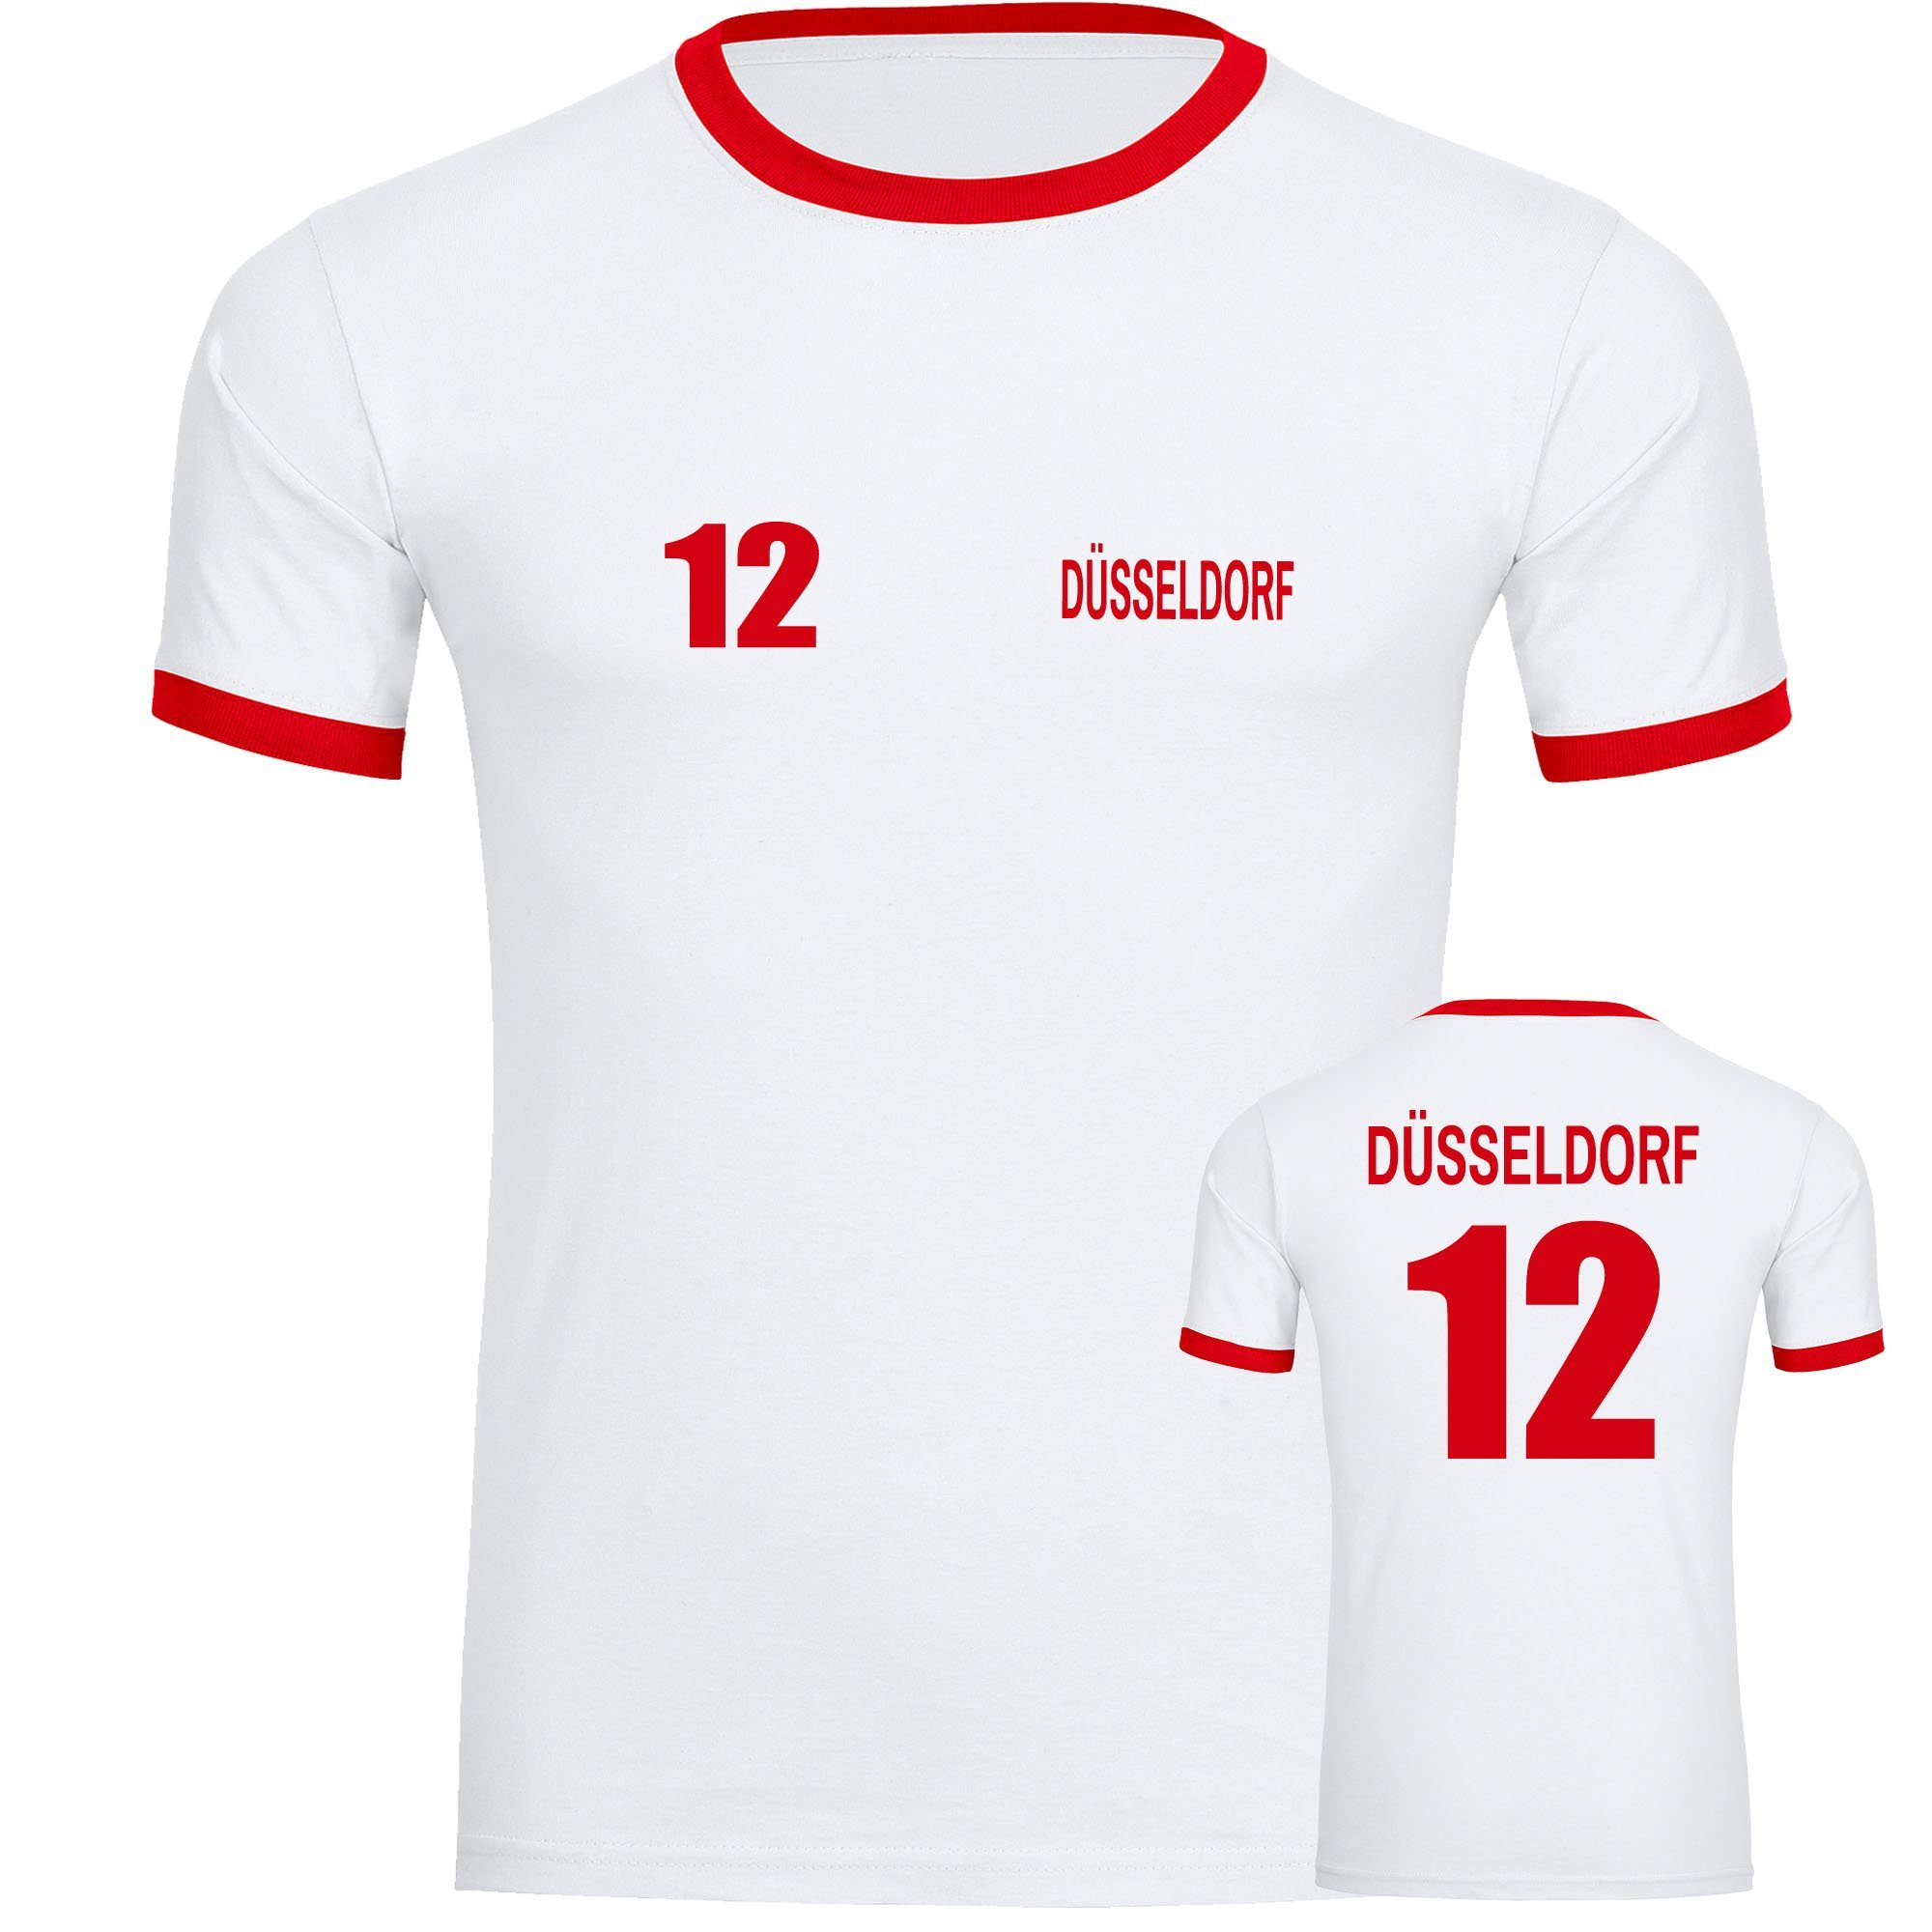 multifanshop T-Shirt Kontrast Düsseldorf - Trikot 12 - Männer